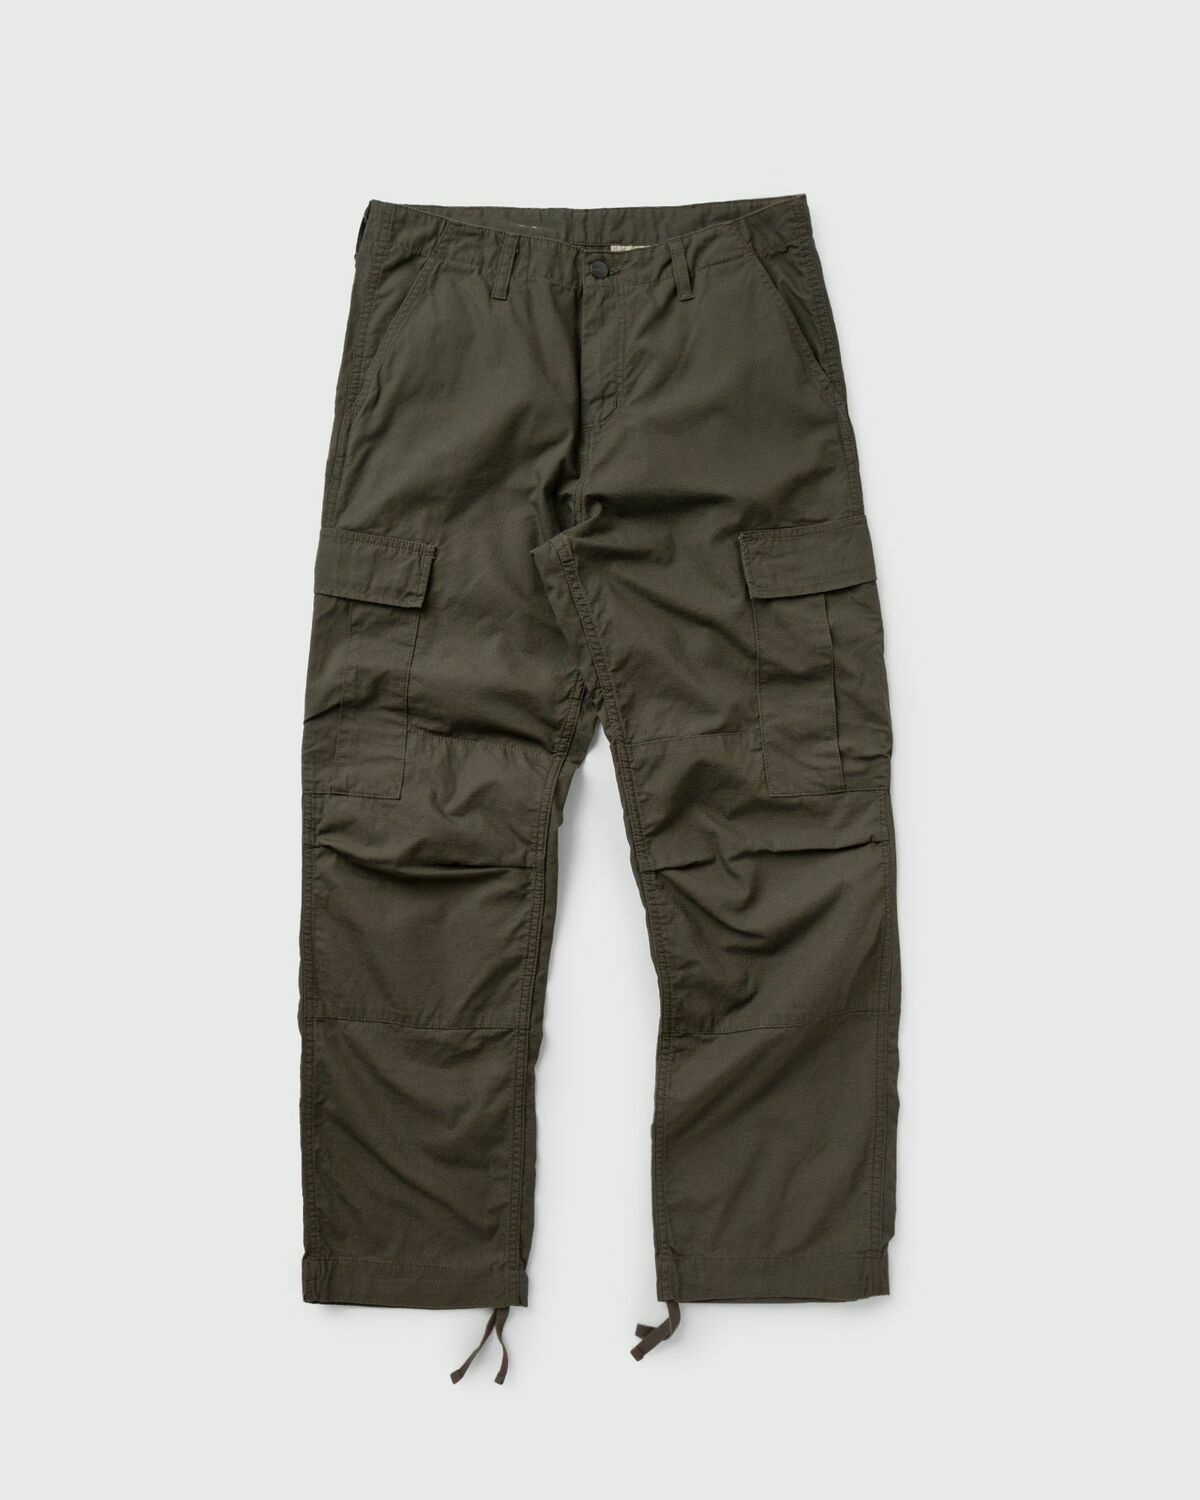 Carhartt Wip Regular Cargo Pant Green - Mens - Cargo Pants